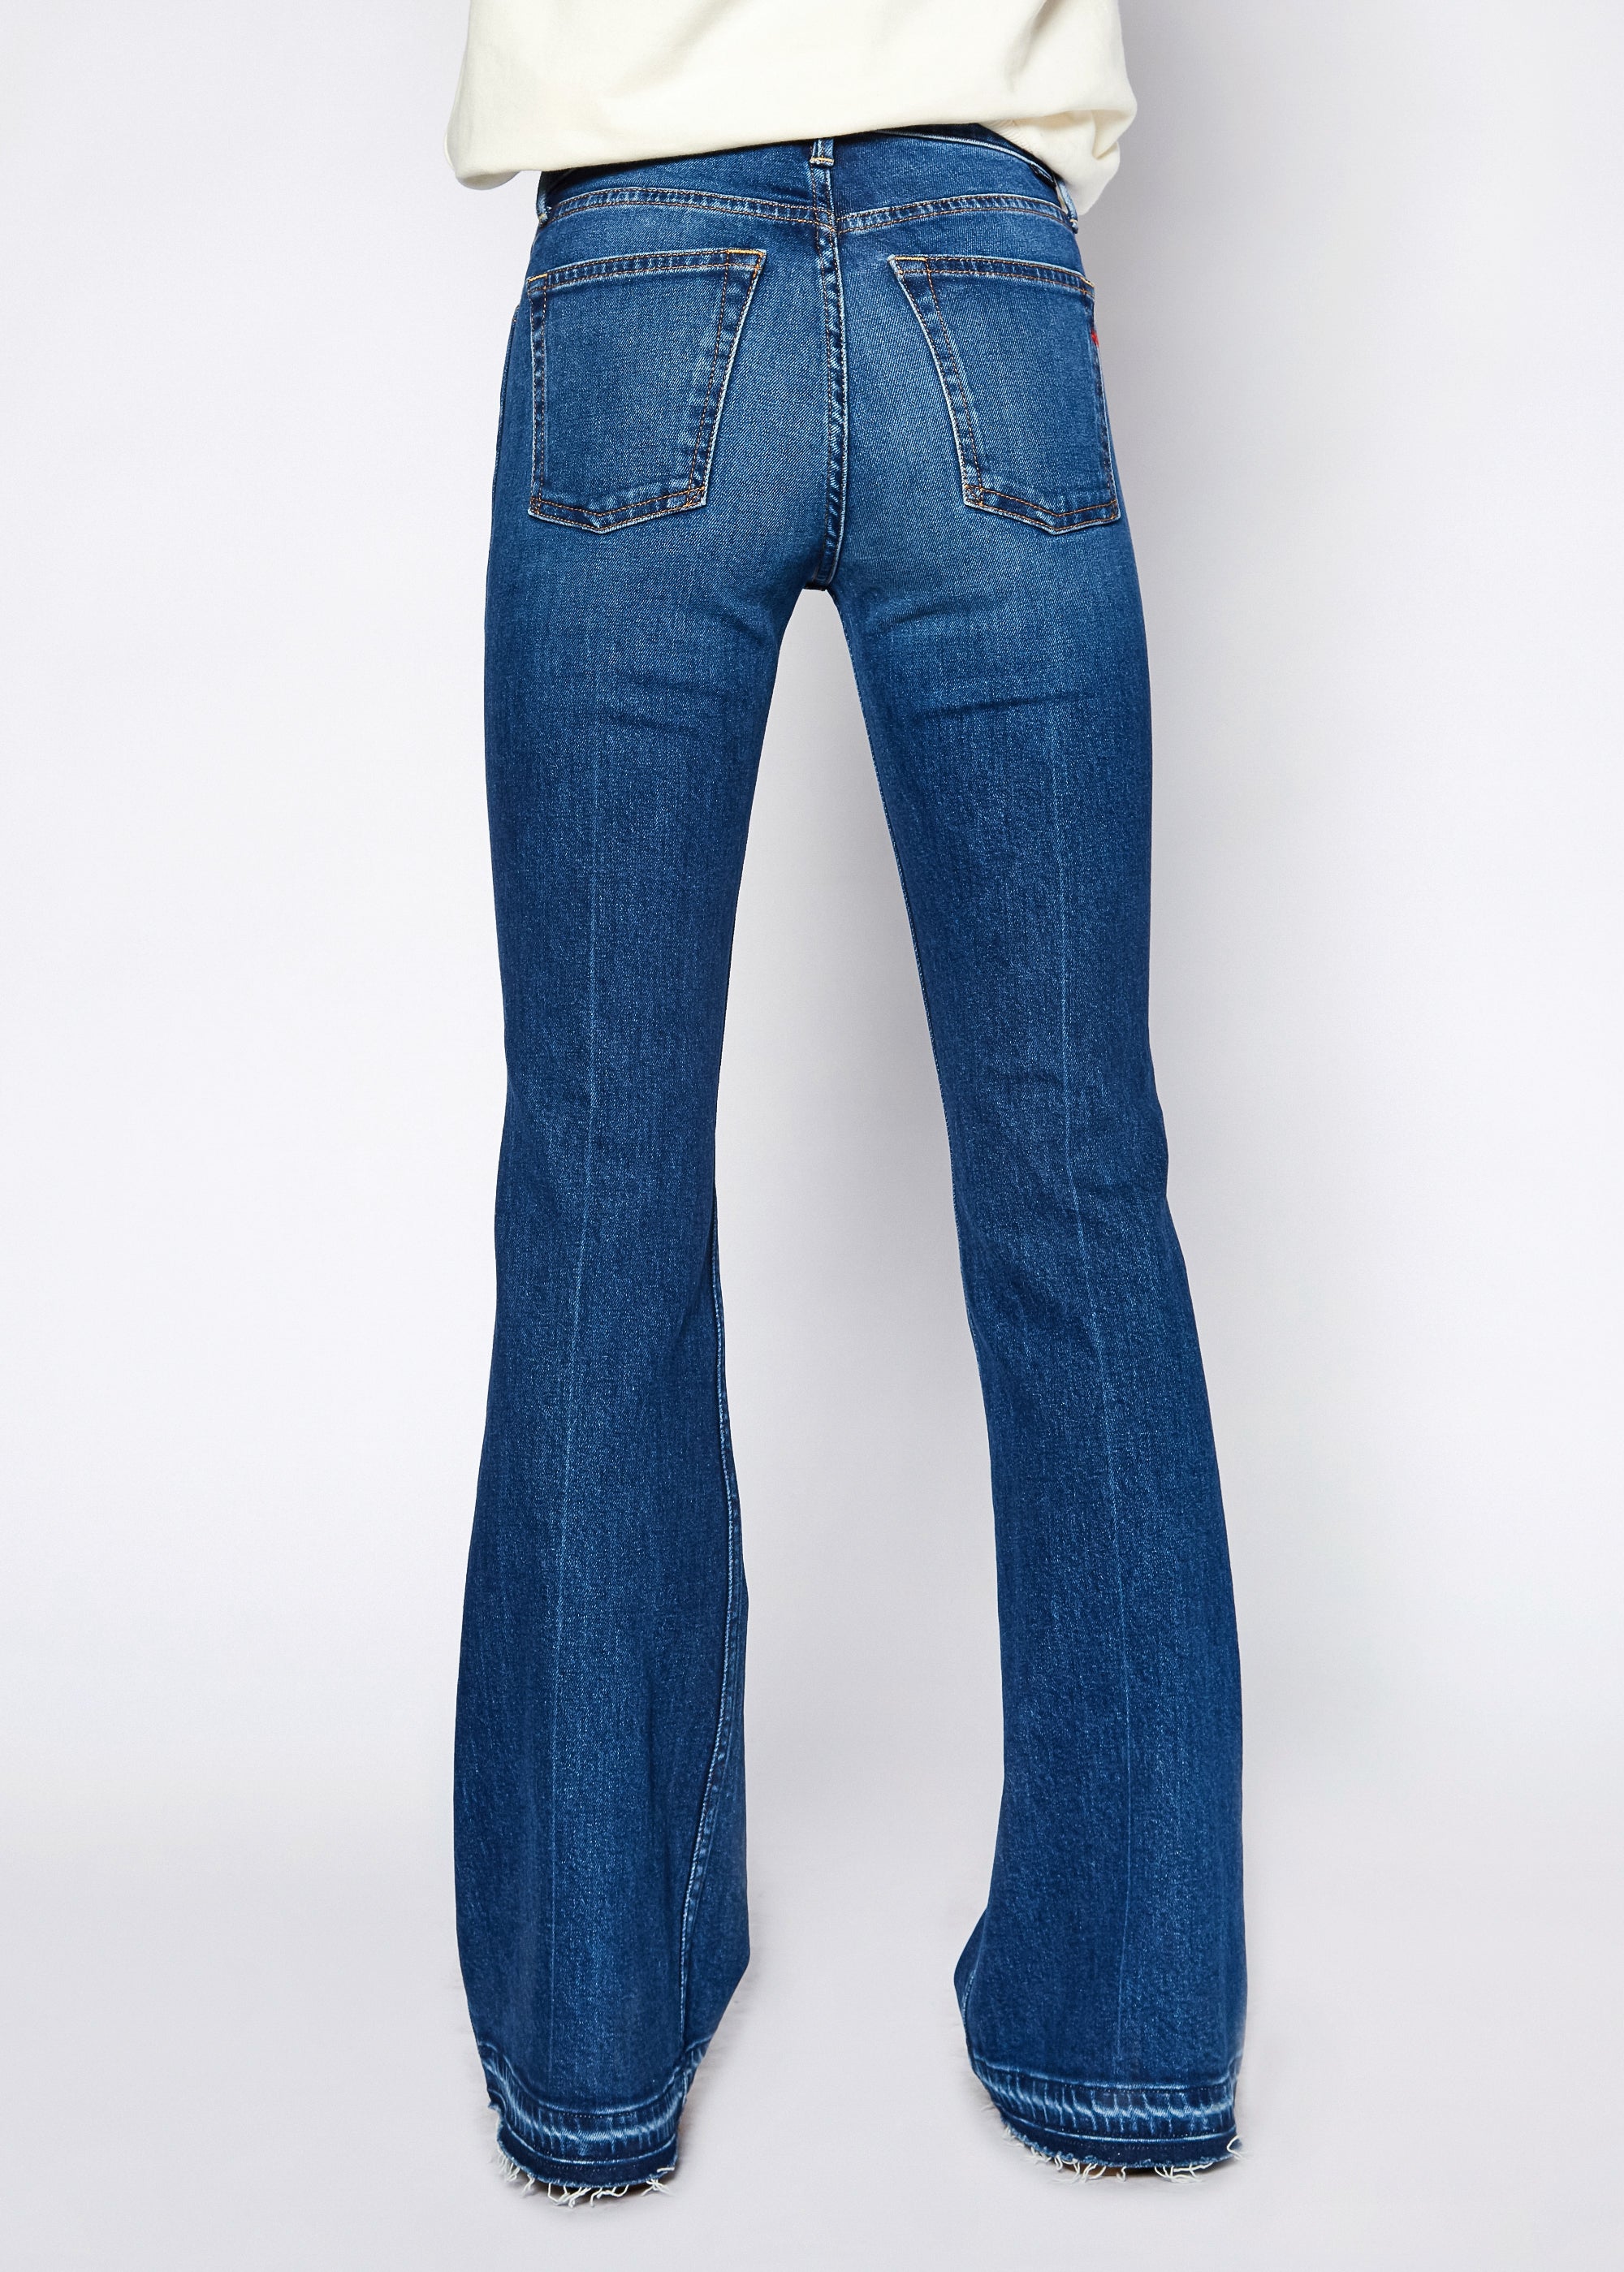 Grace Flare Jeans in Dallas - Noend Denim